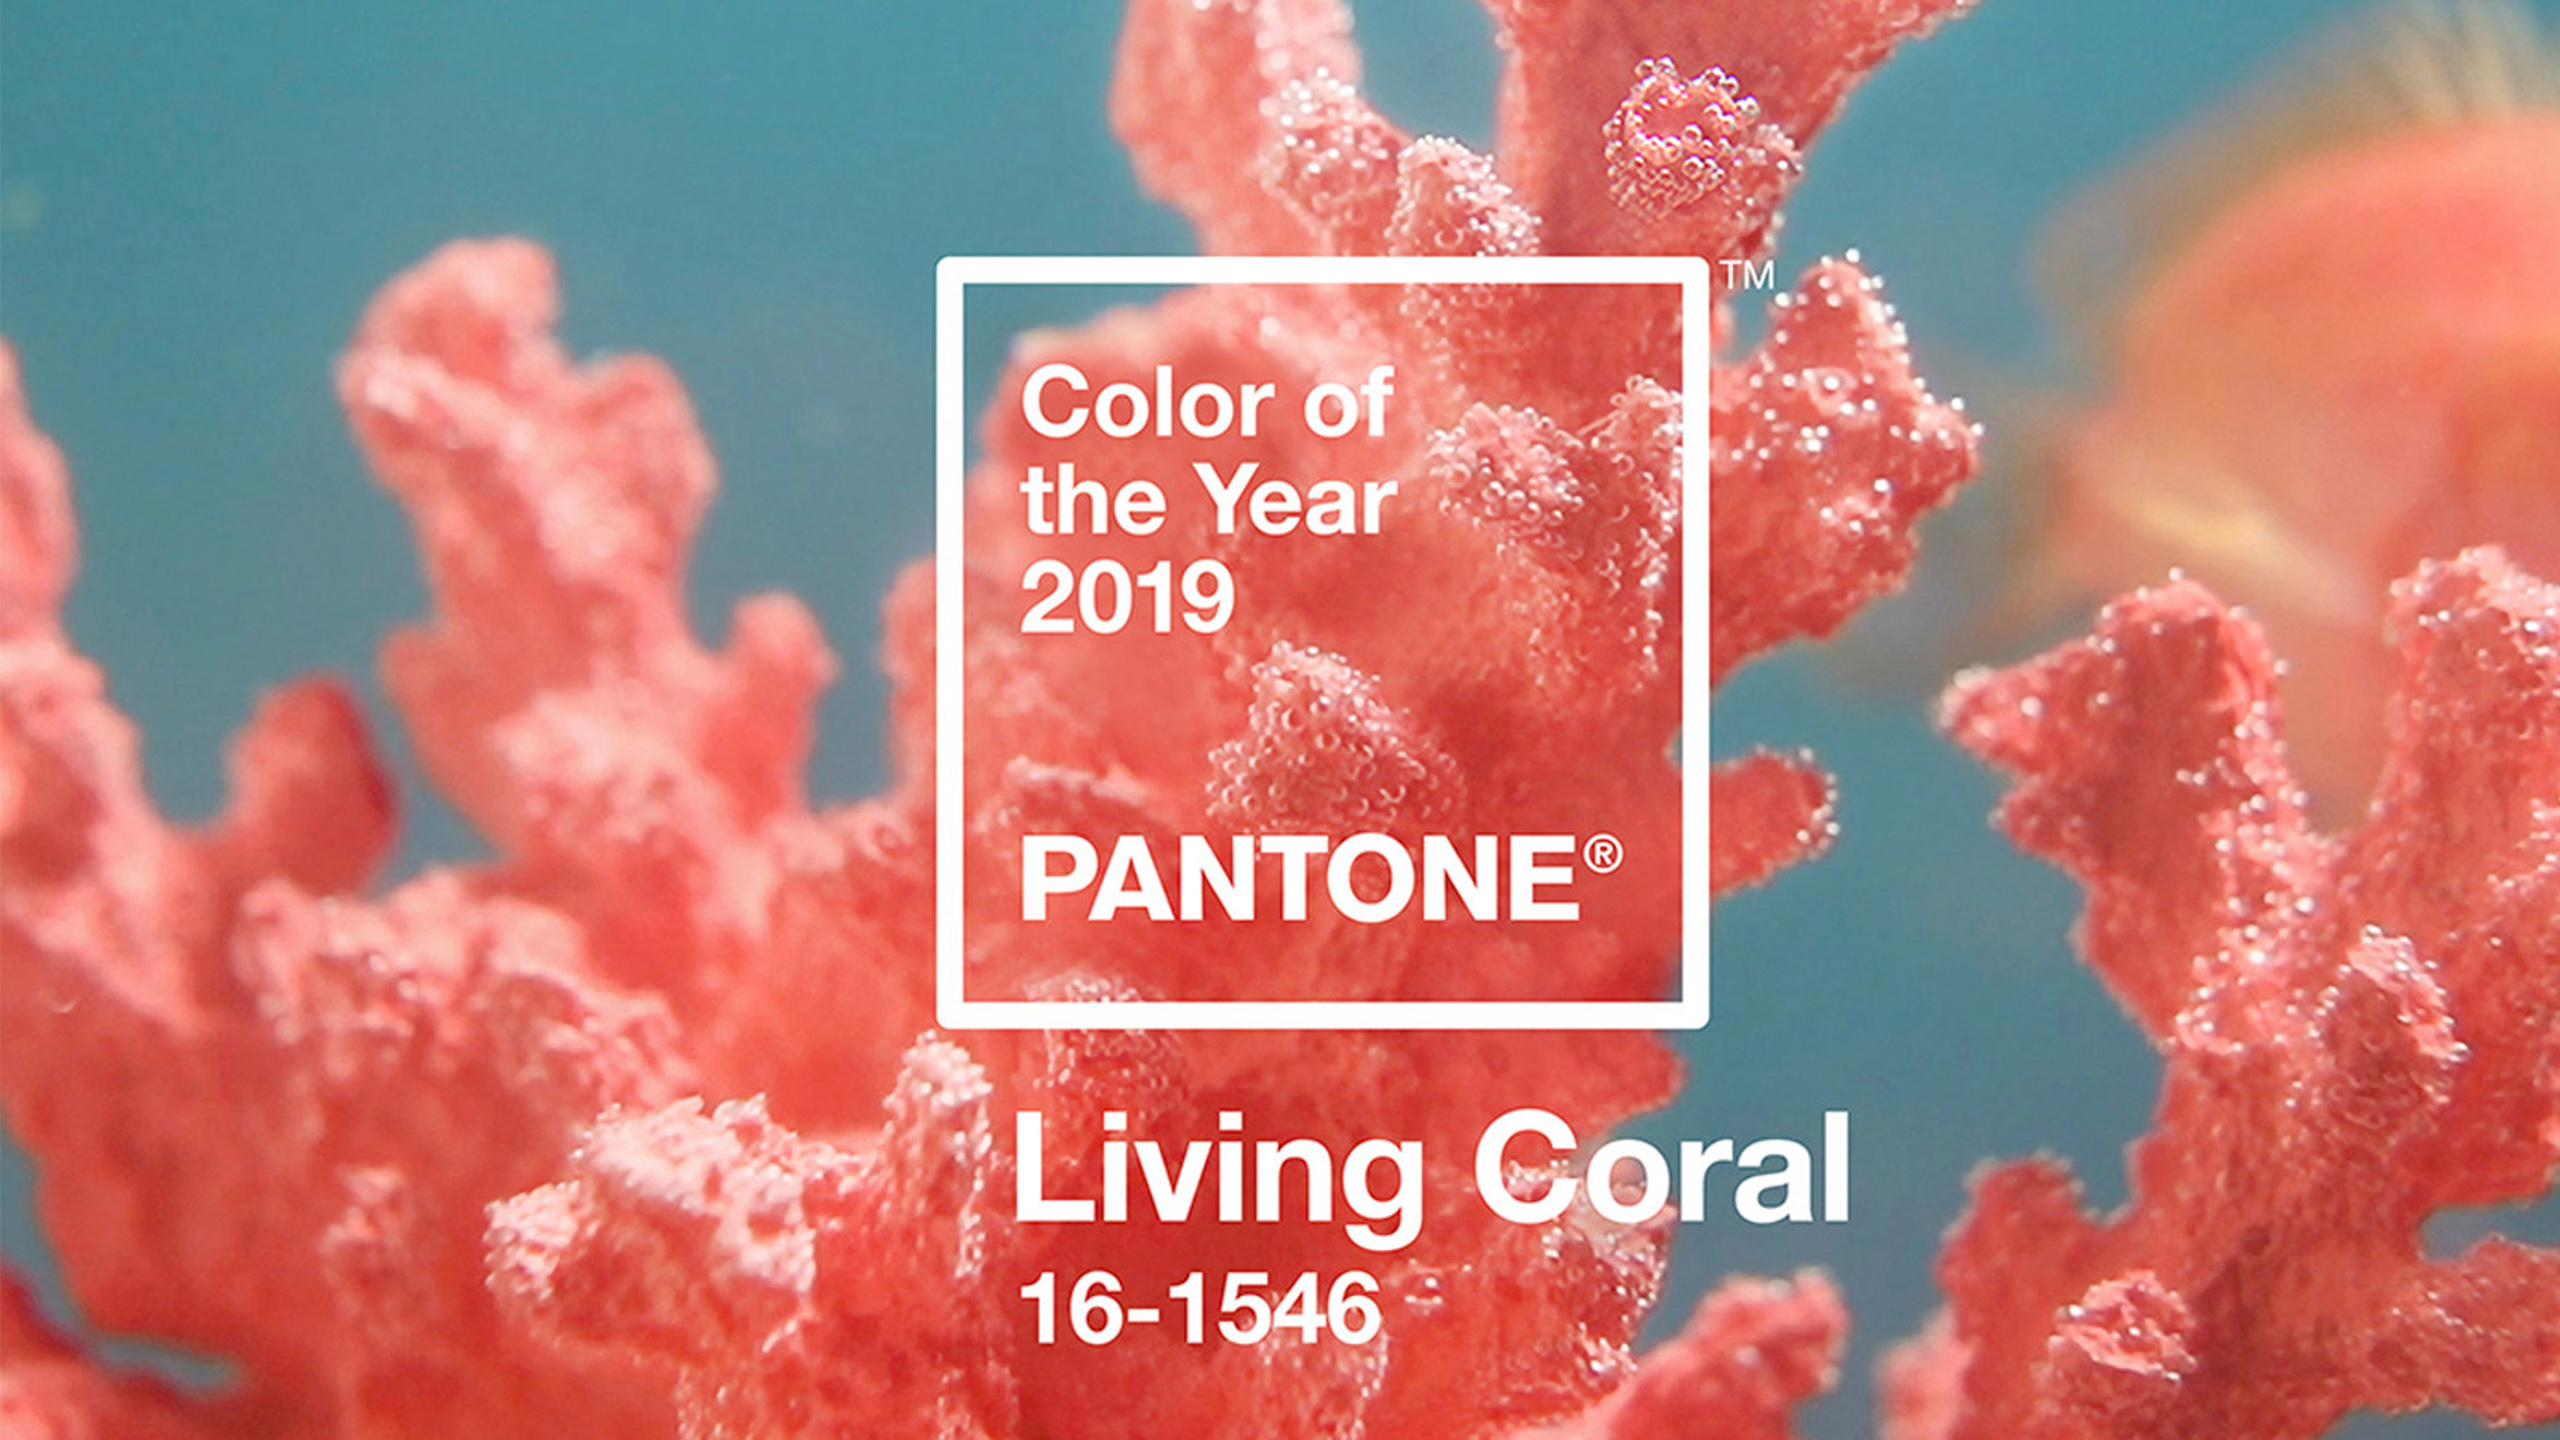 Coral color